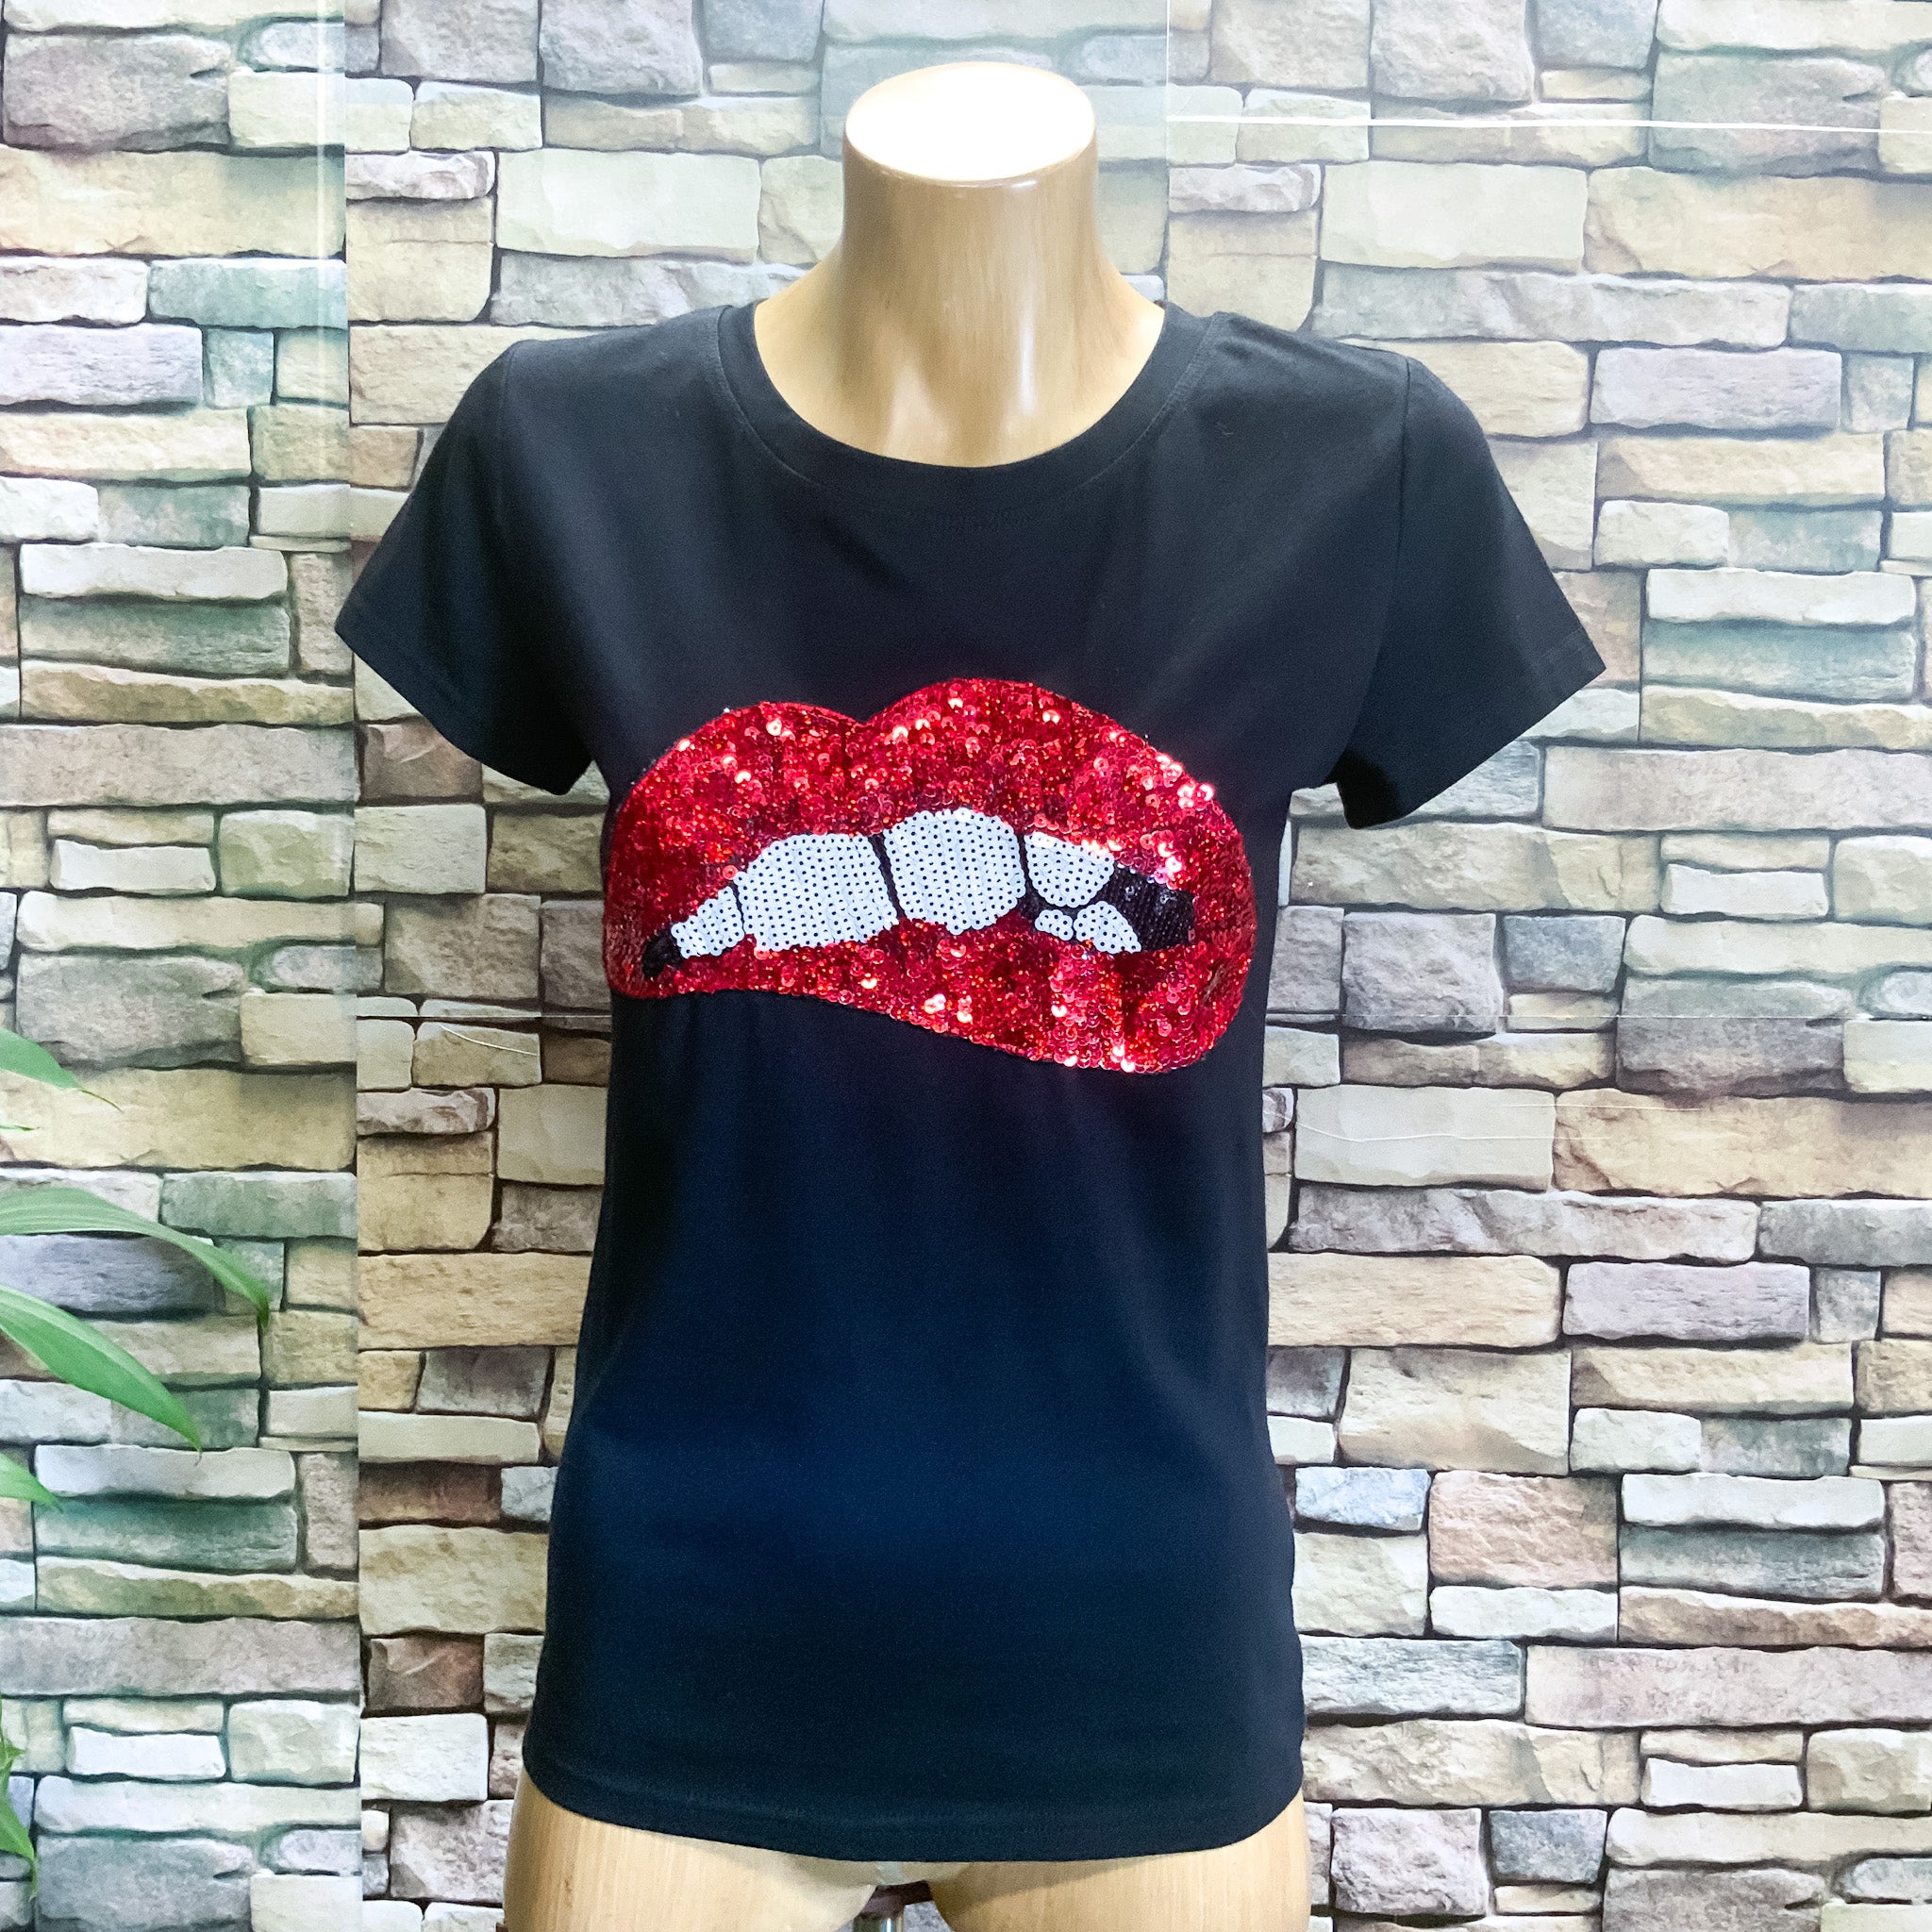 Hot Lips Glittery Sequin Black Short Sleeve T-Shirt - Size S